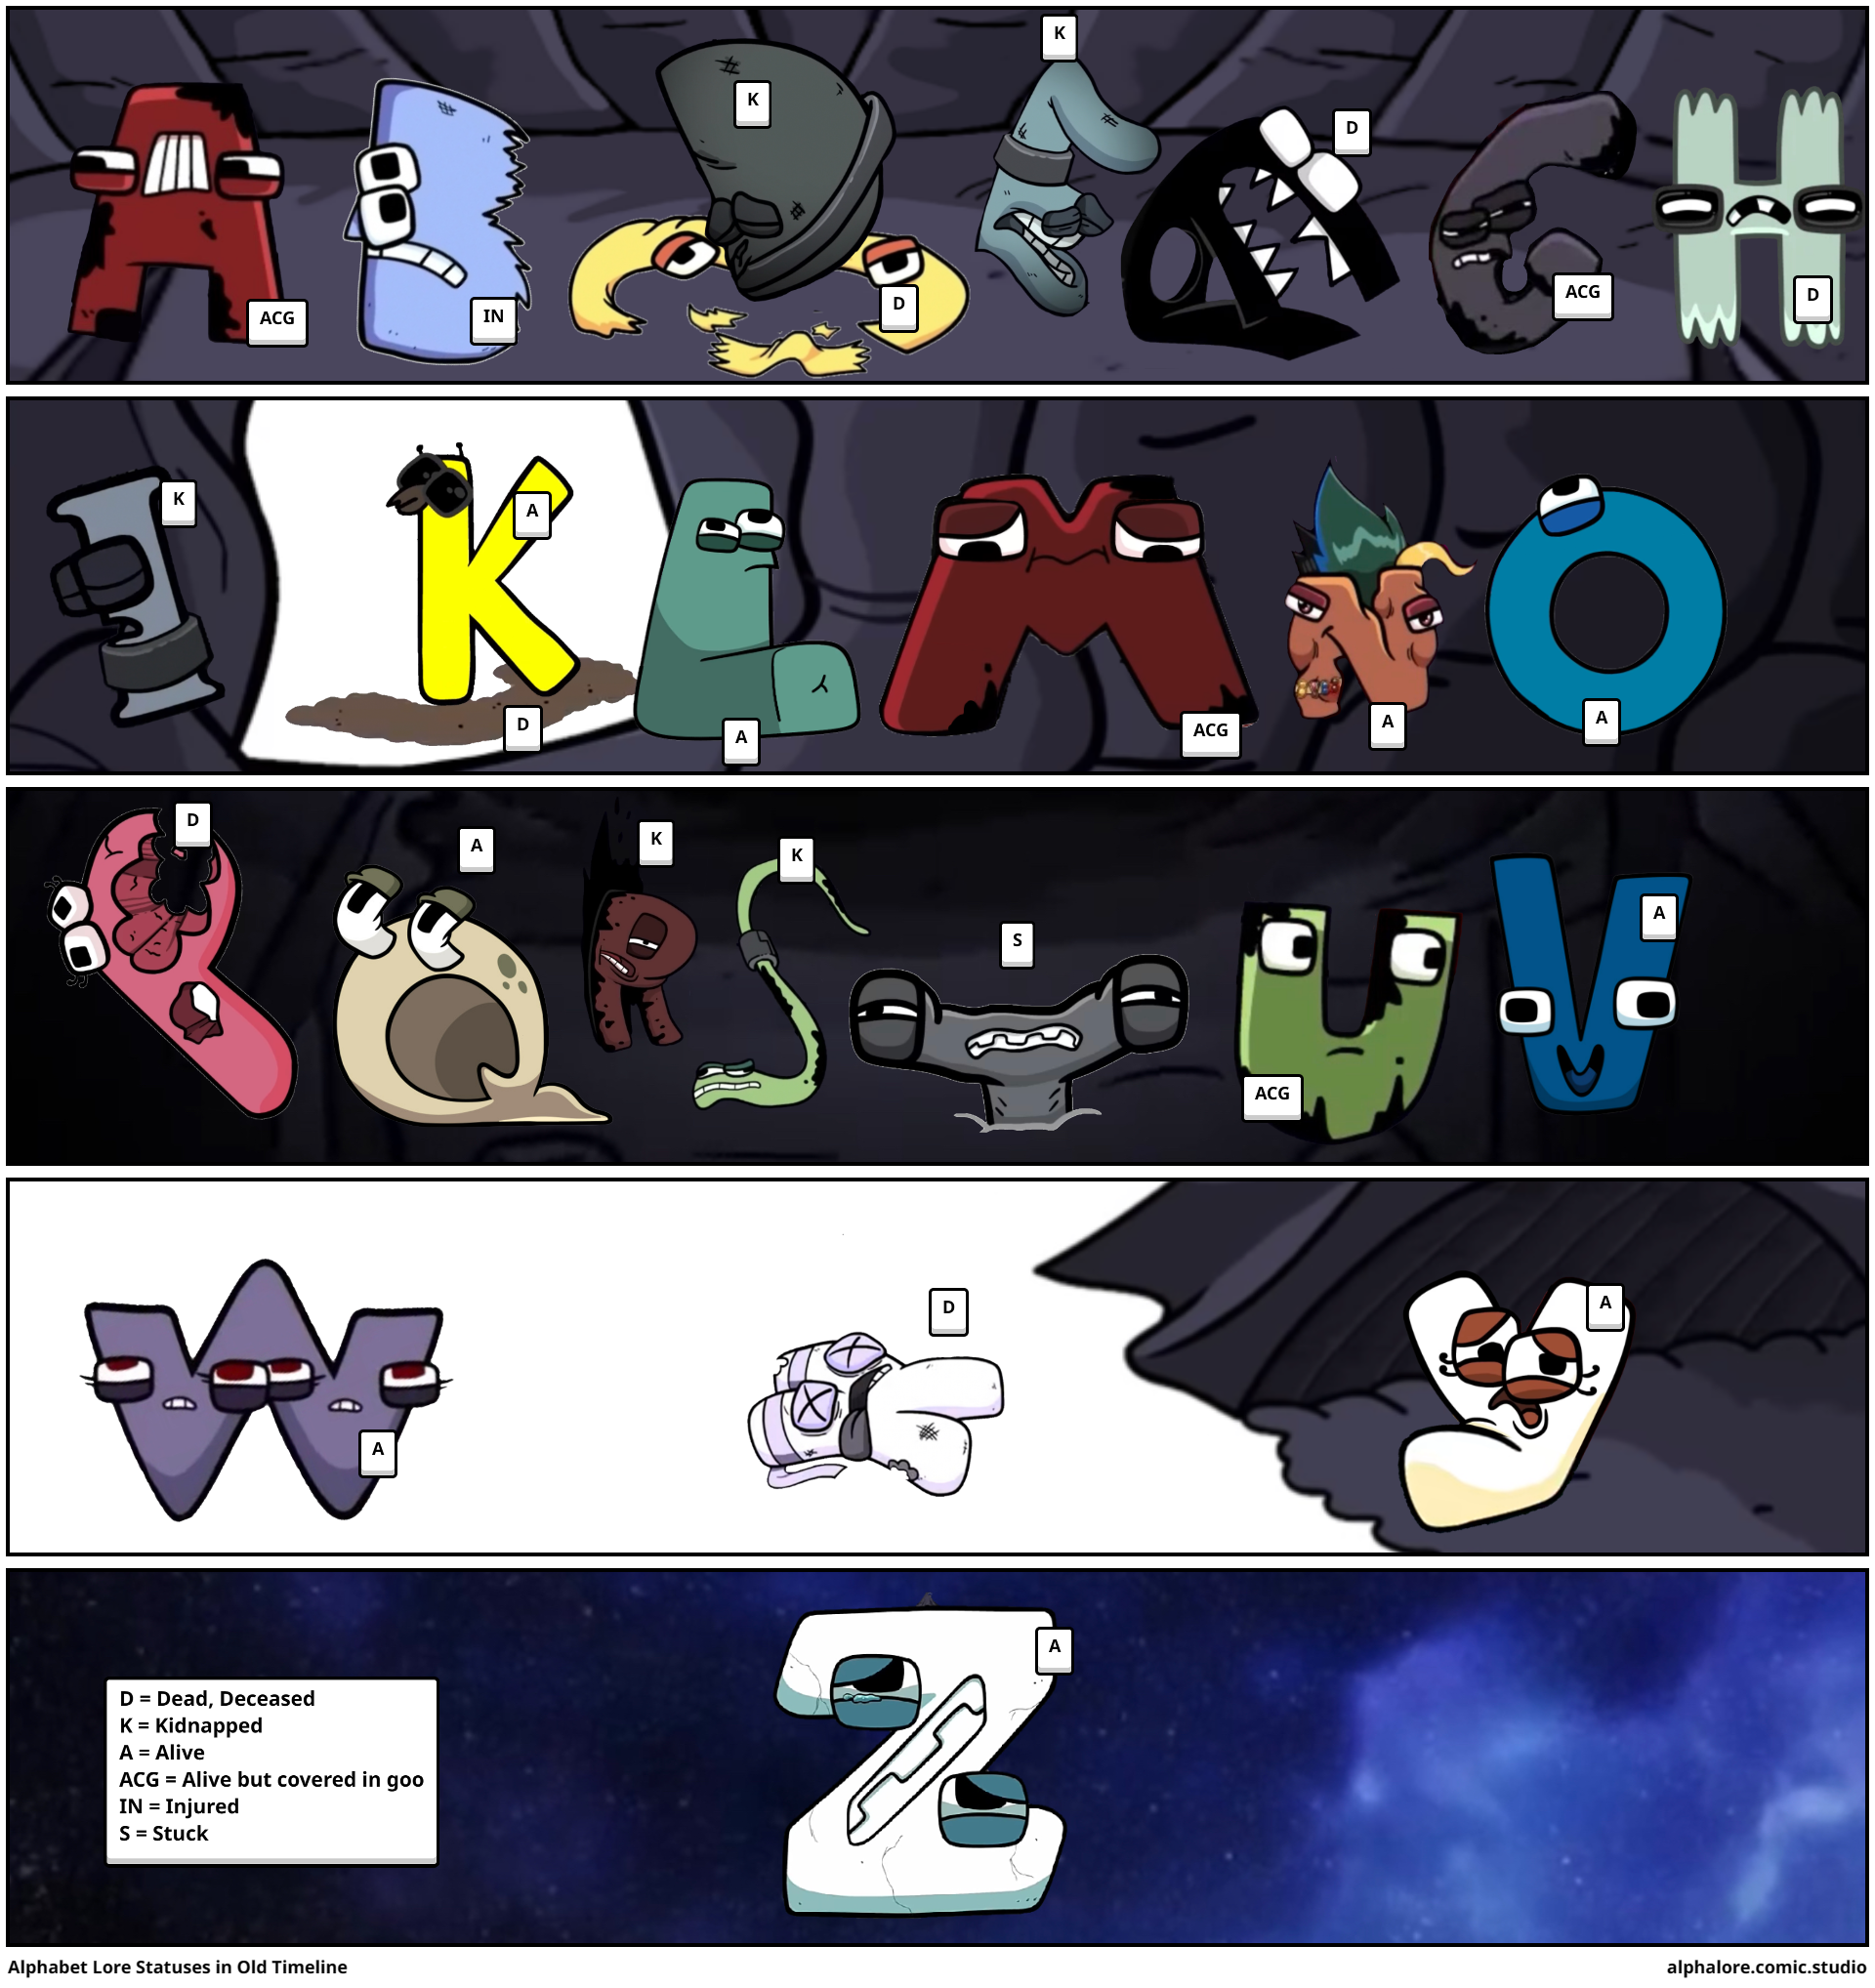 all alphabet lore alive or hurt part 1 - Comic Studio